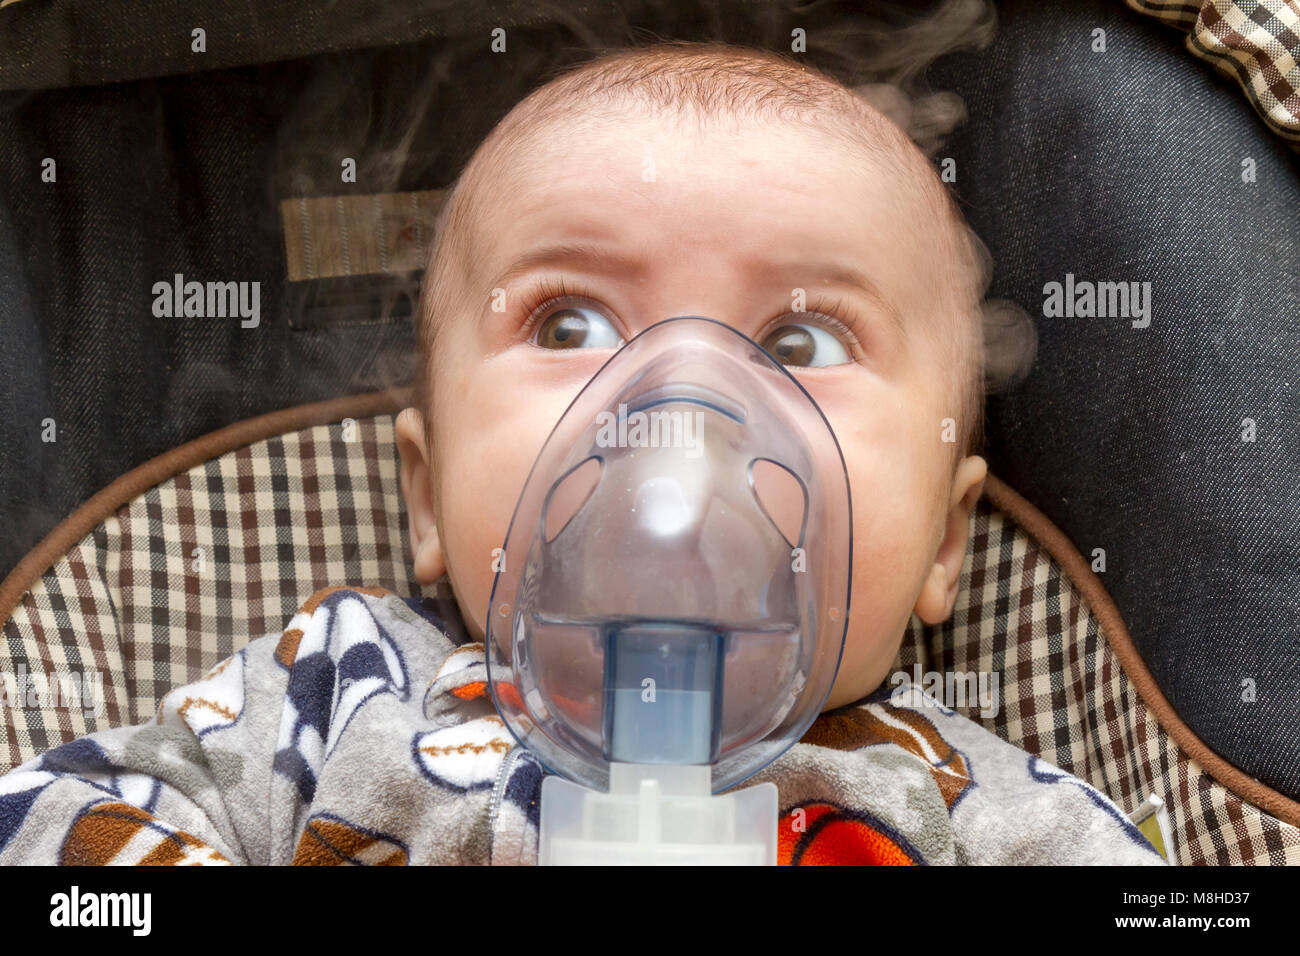 mask inhalator on the child's face. Newborn Photo - Alamy